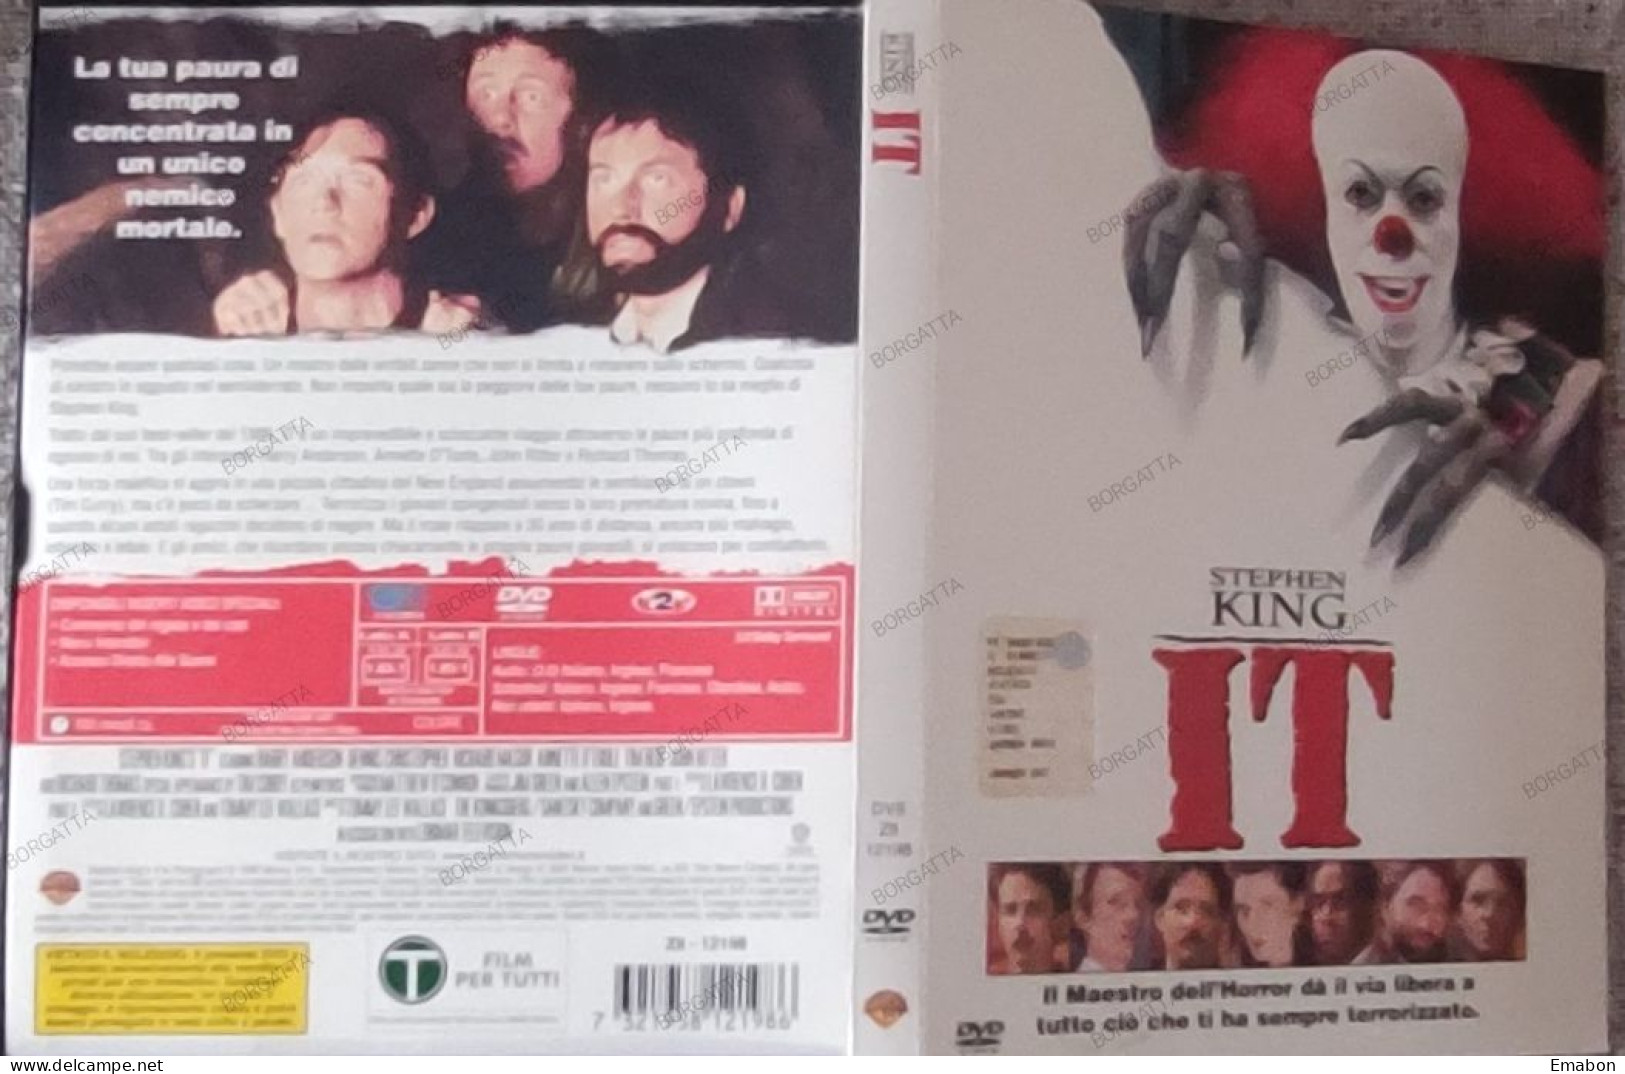 BORGATTA - HORROR - Dvd " IT "- STEPHEN KING - PAL 2 - WARNER 2003 -  USATO In Buono Stato - Horreur